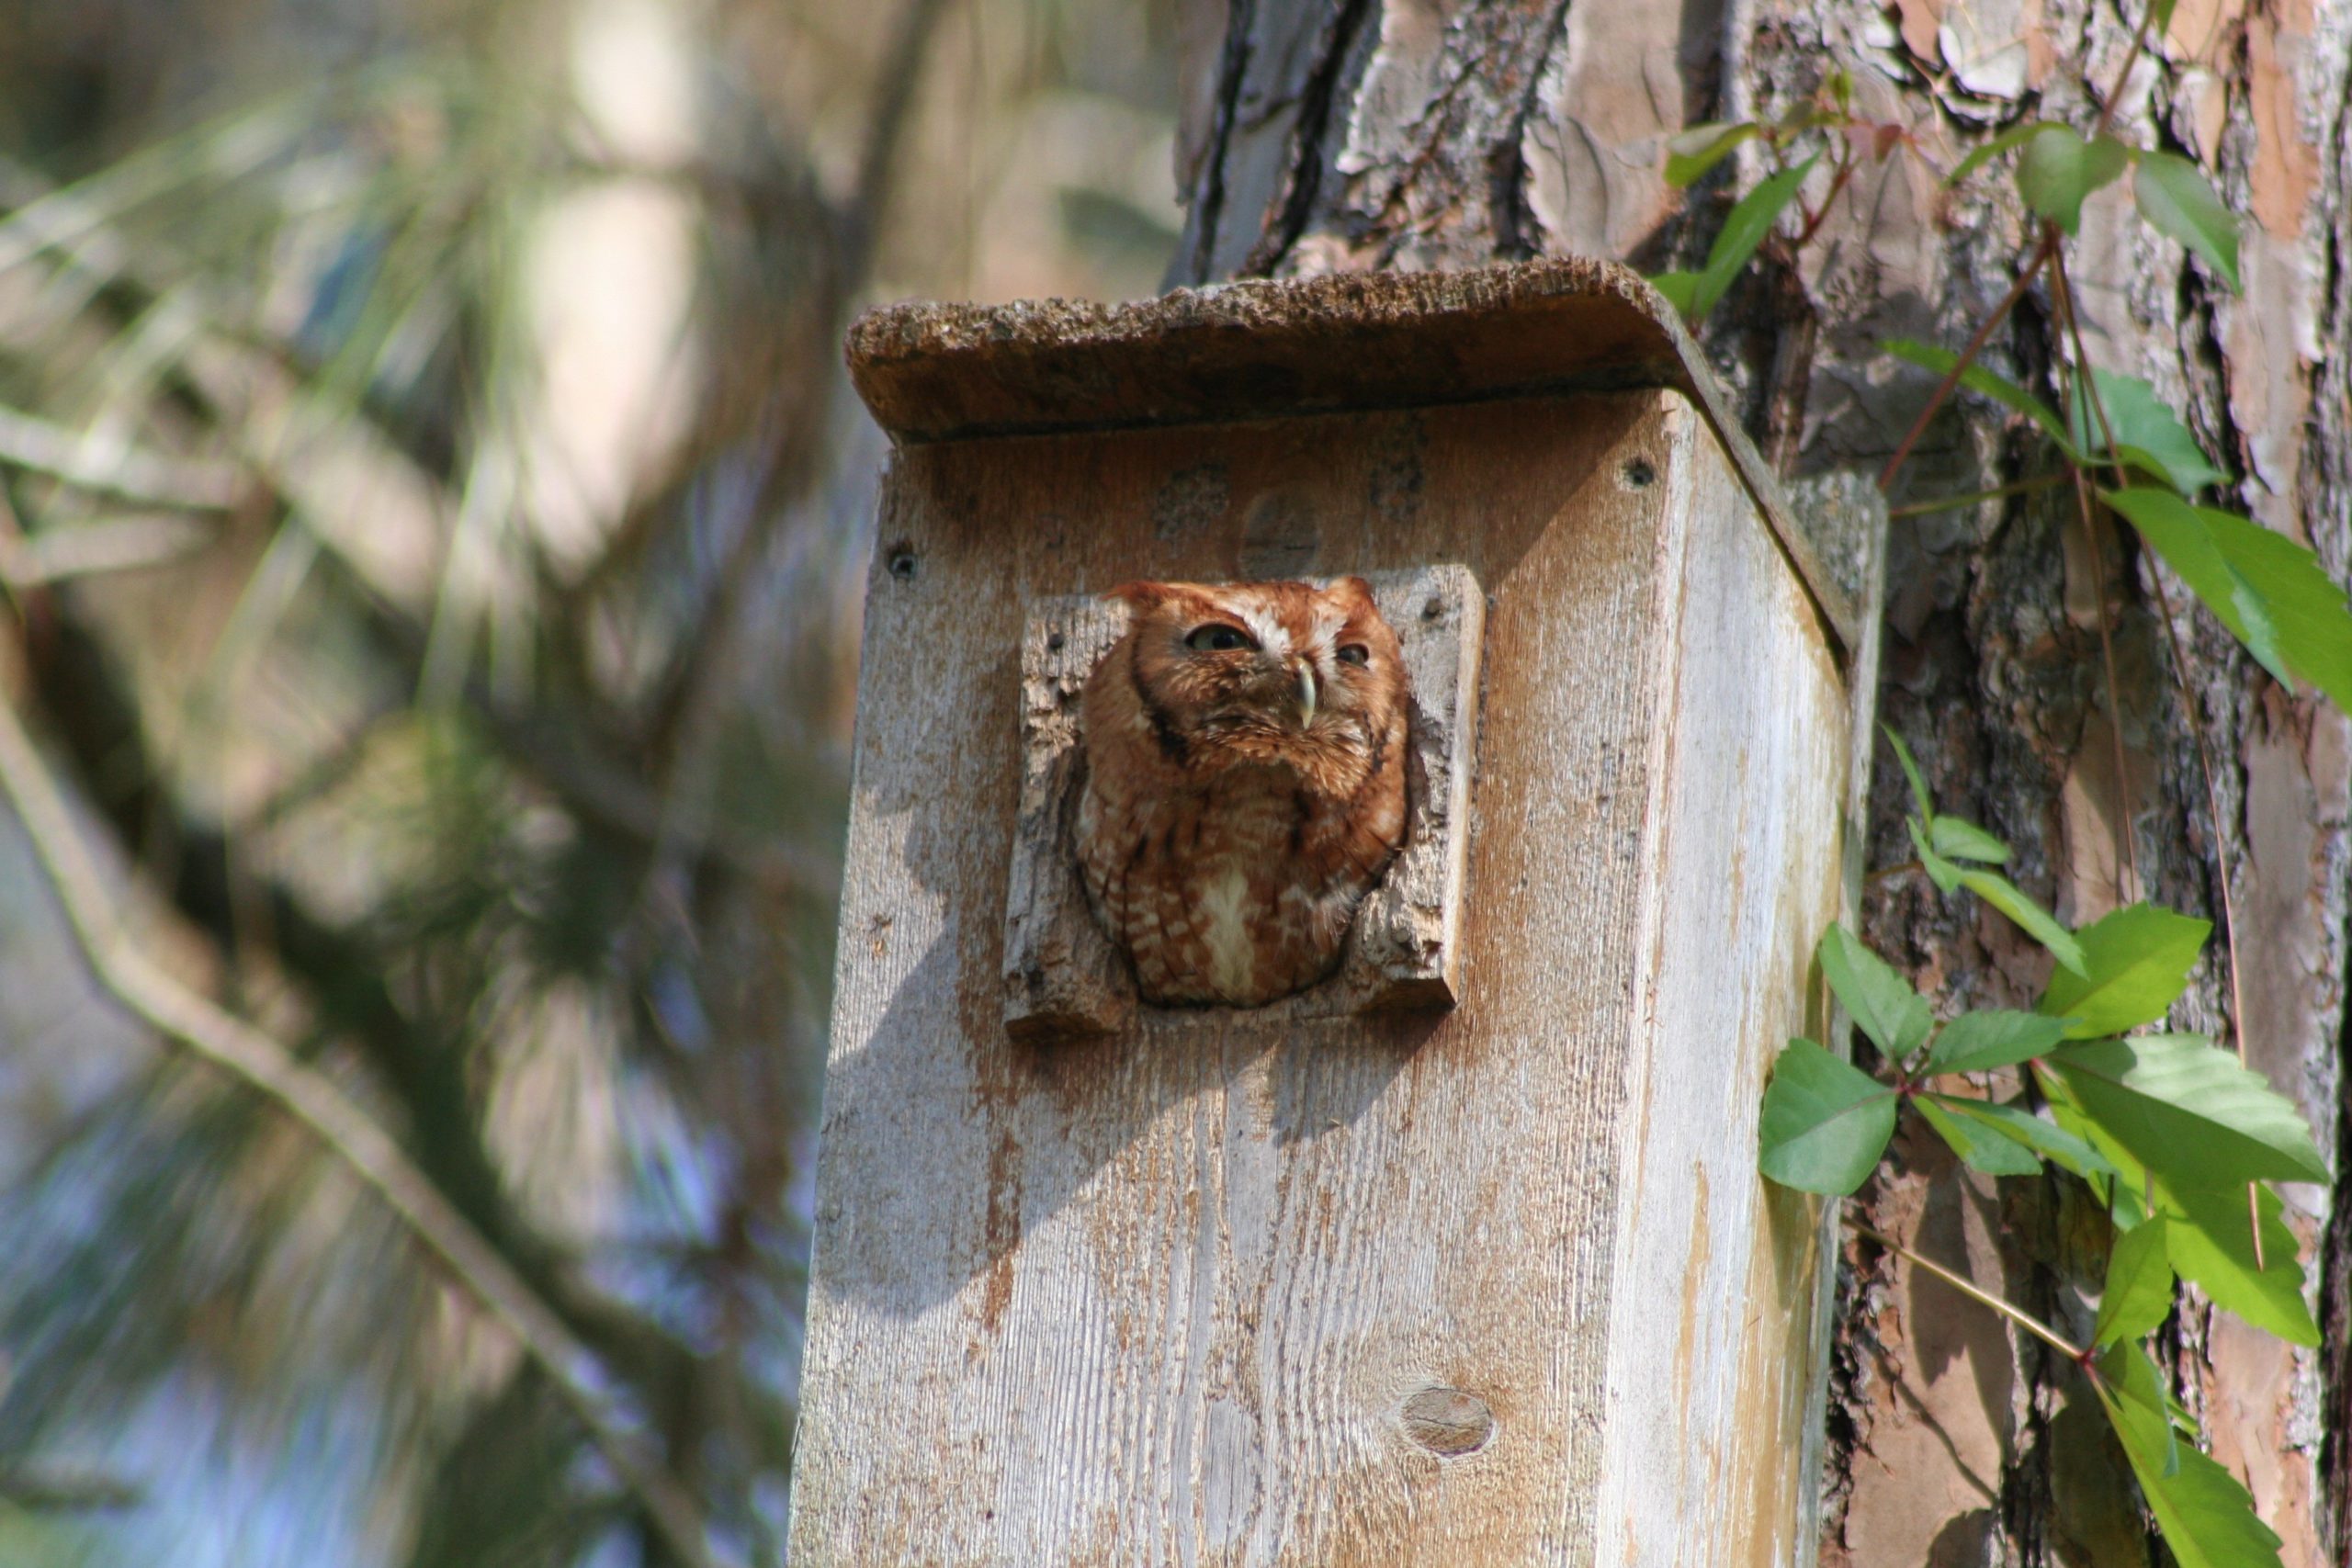 owl houses provide habitats